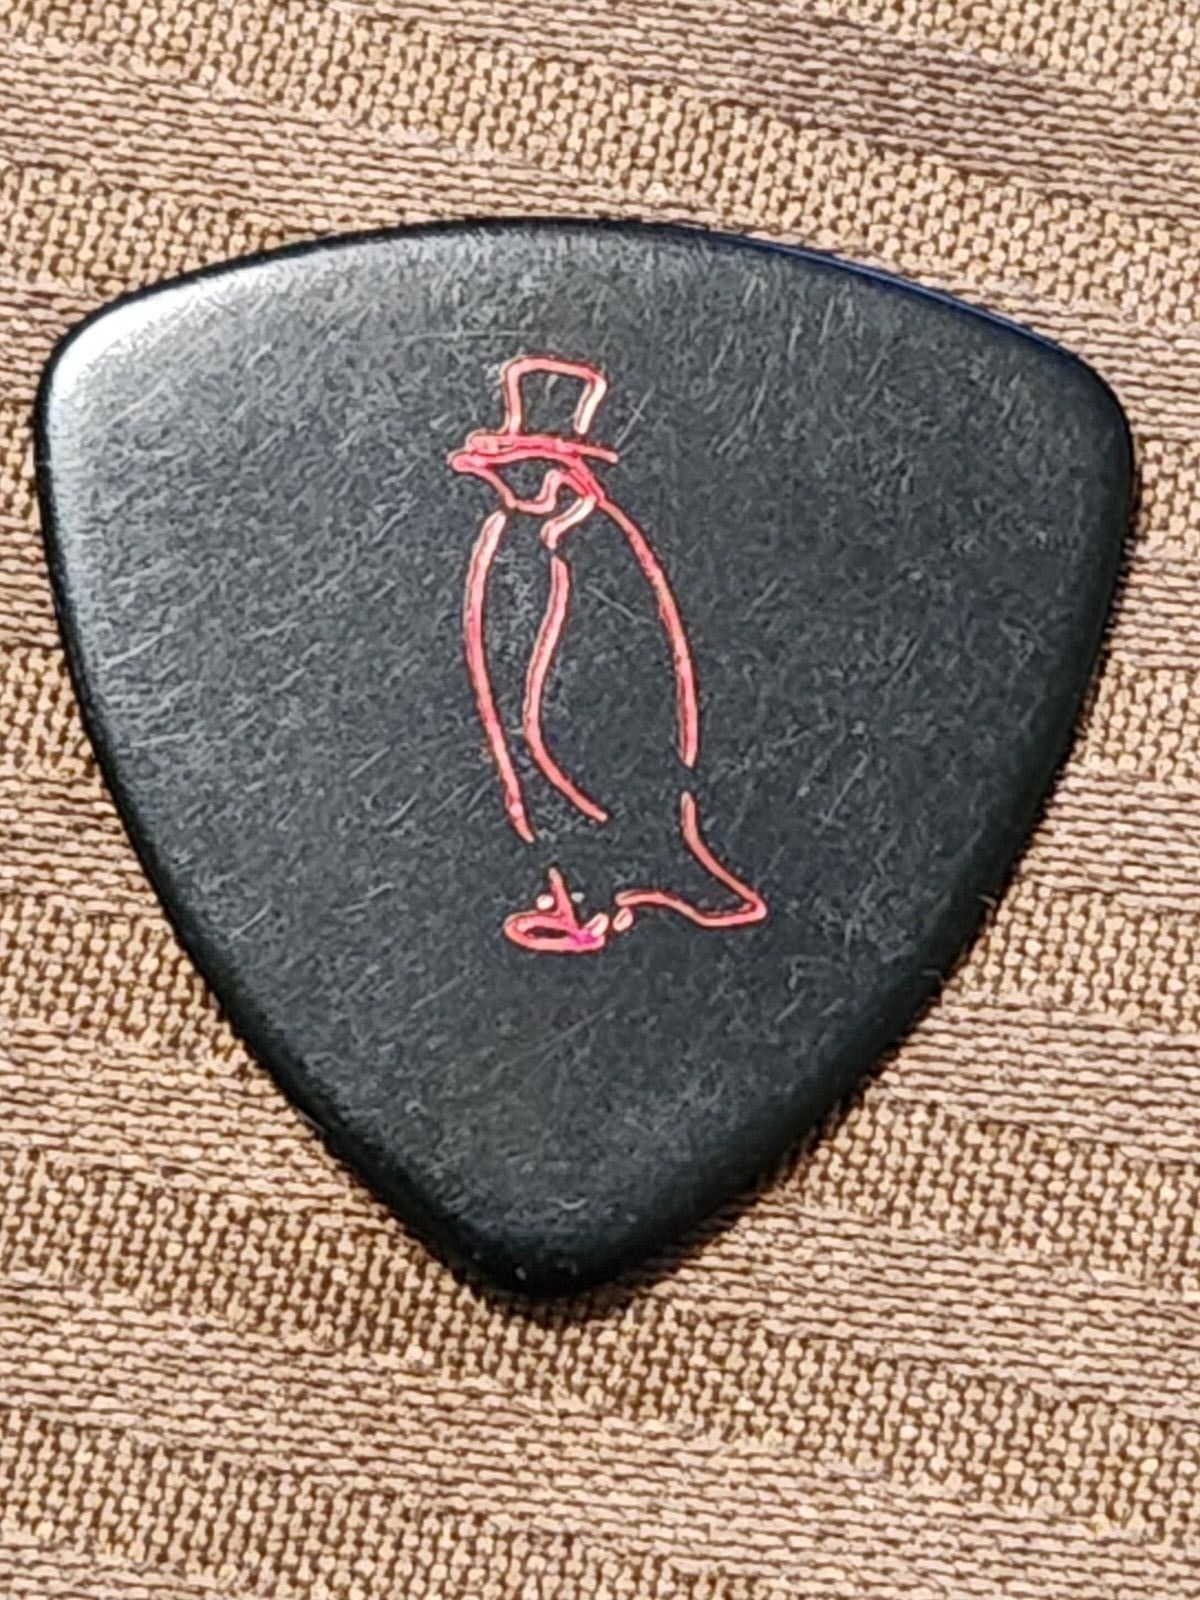 Fleetwood Mac John McVie Guitar Pick Red Penguin on Black Bass Guitar Pick